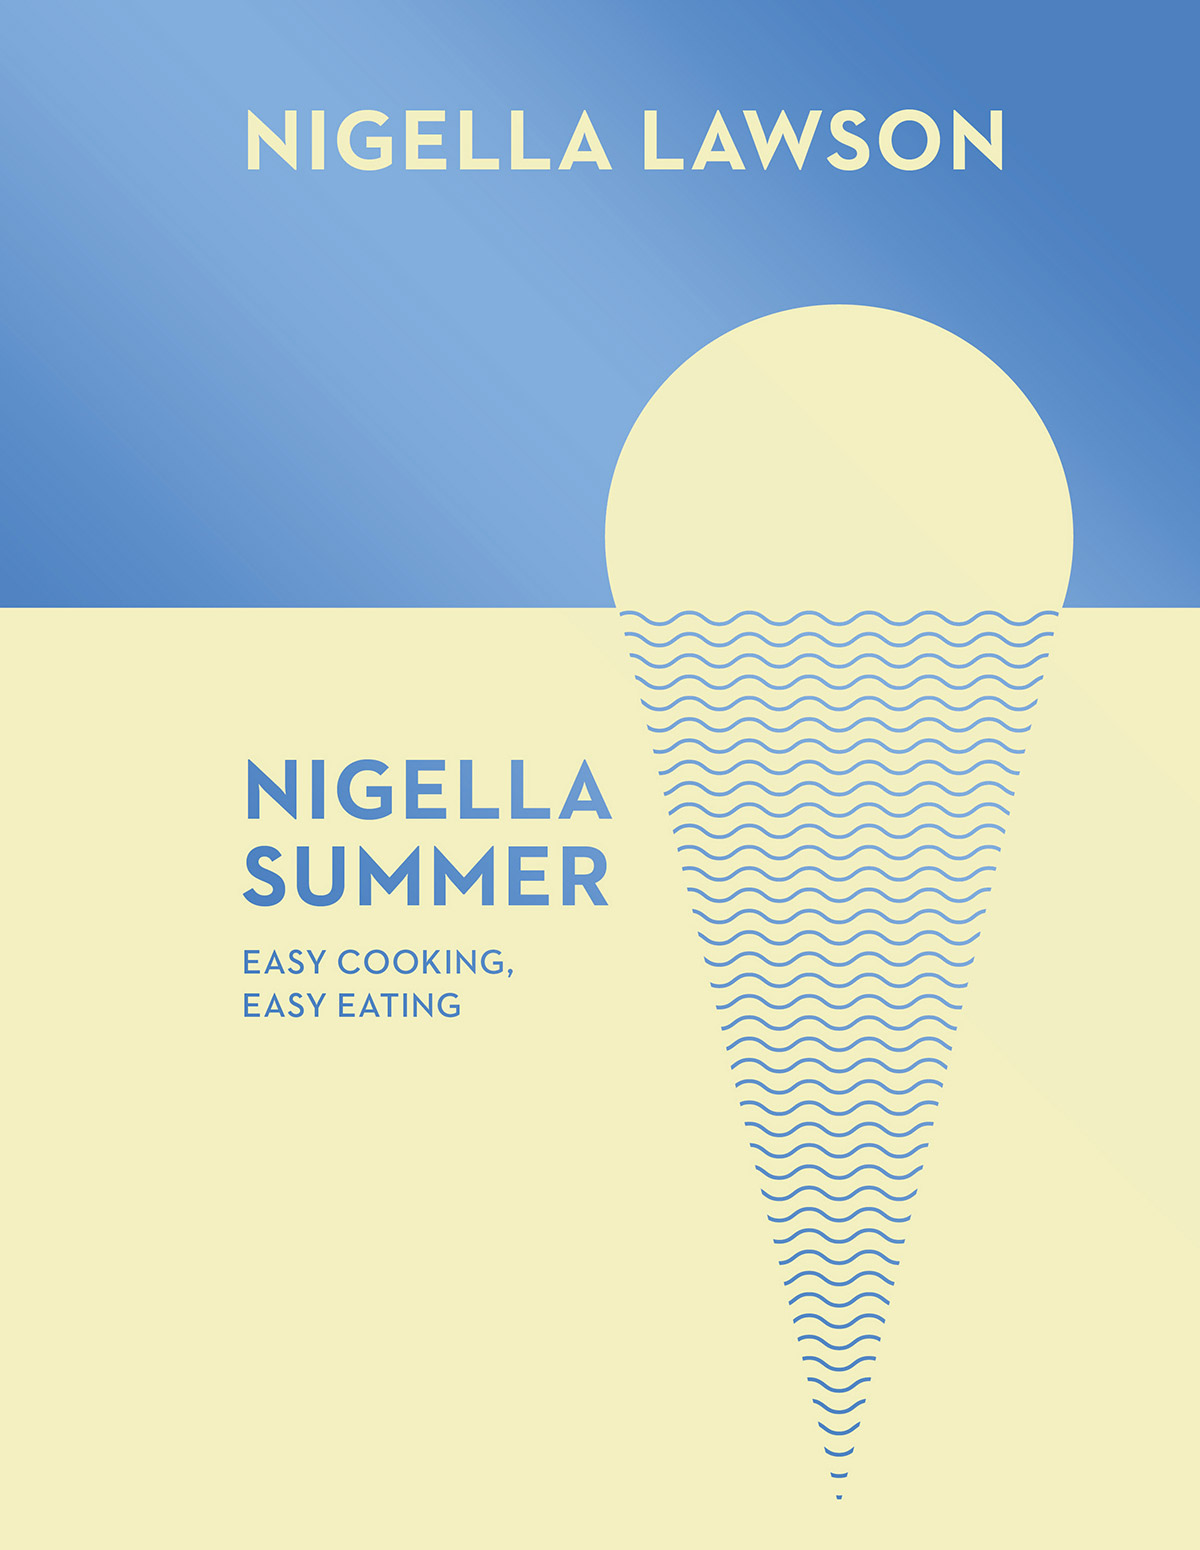 NIGELLA SUMMER UK book cover